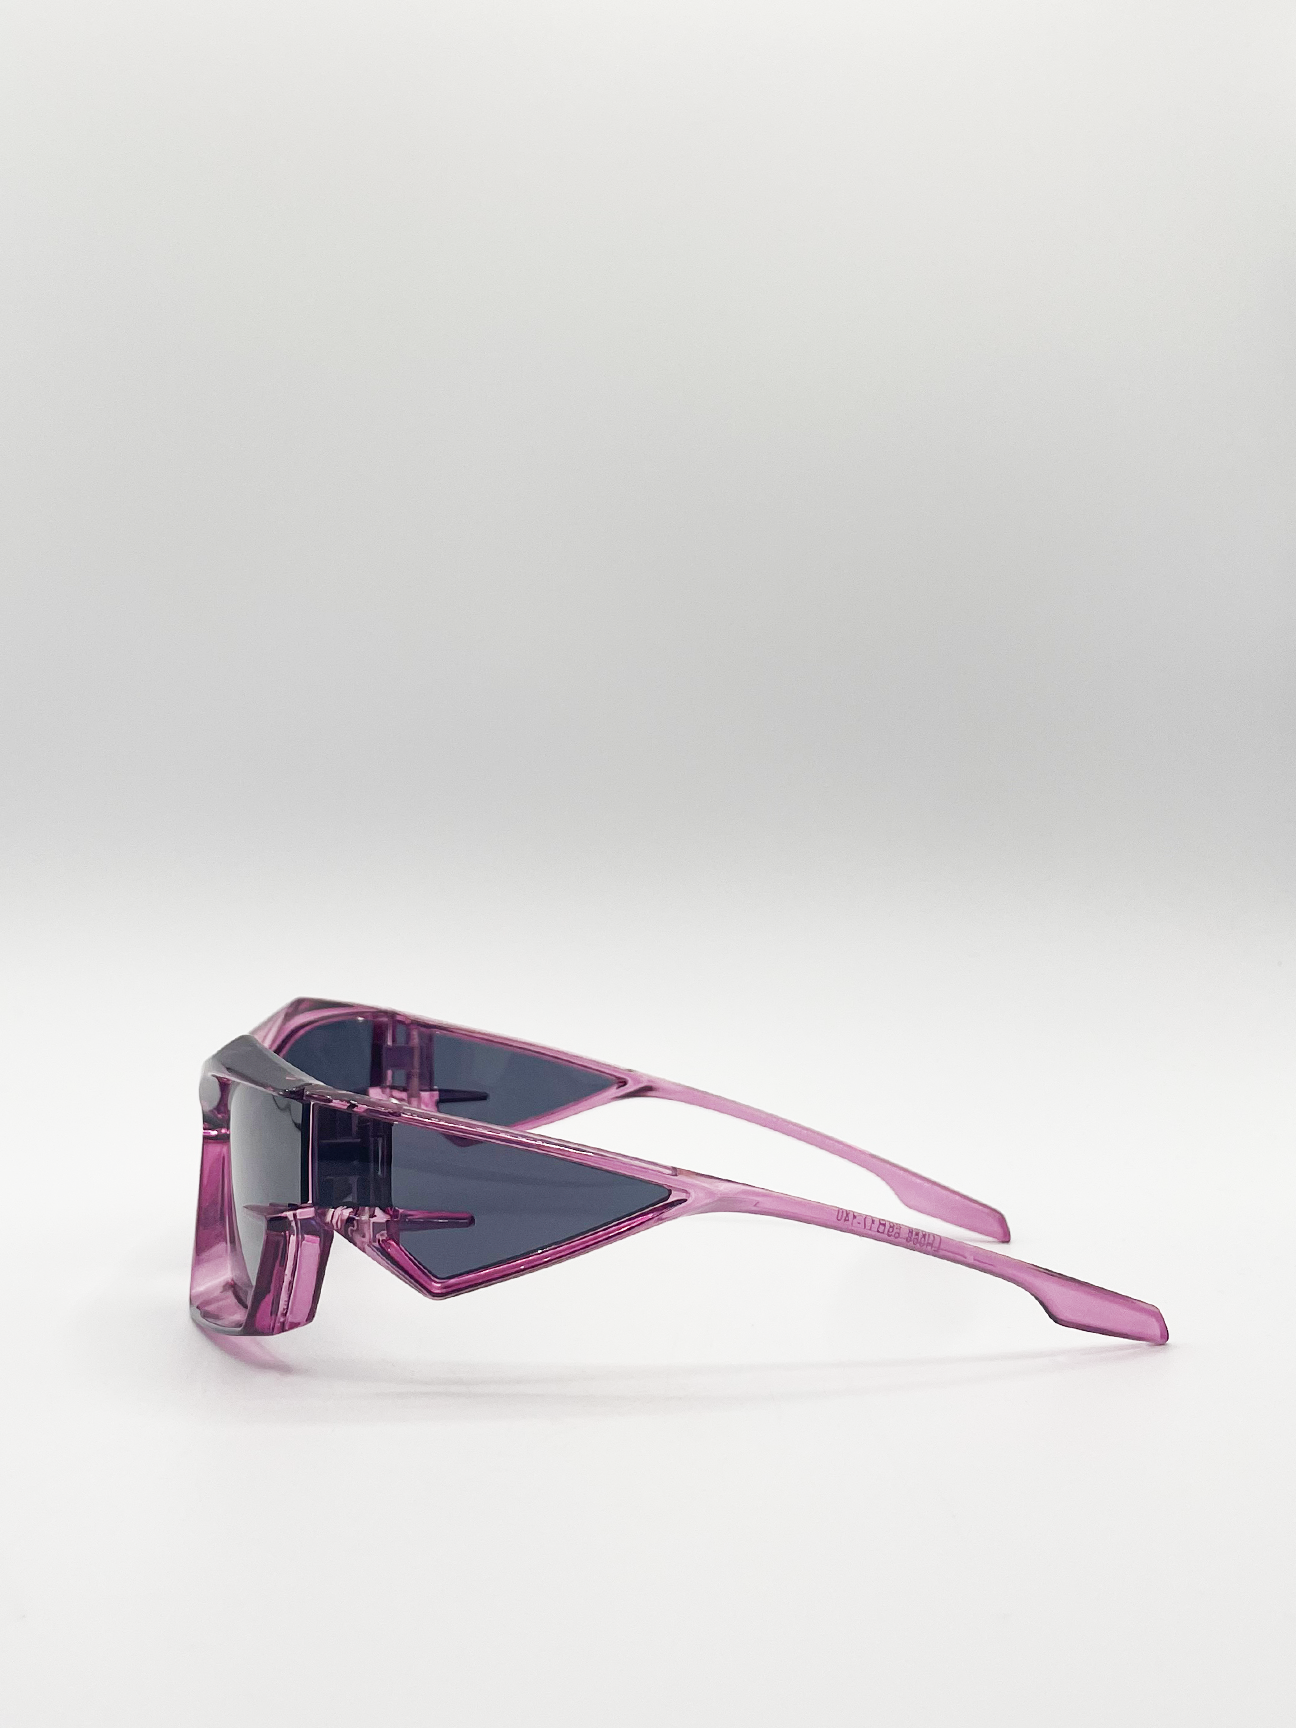 Racer style sunglasses in purple